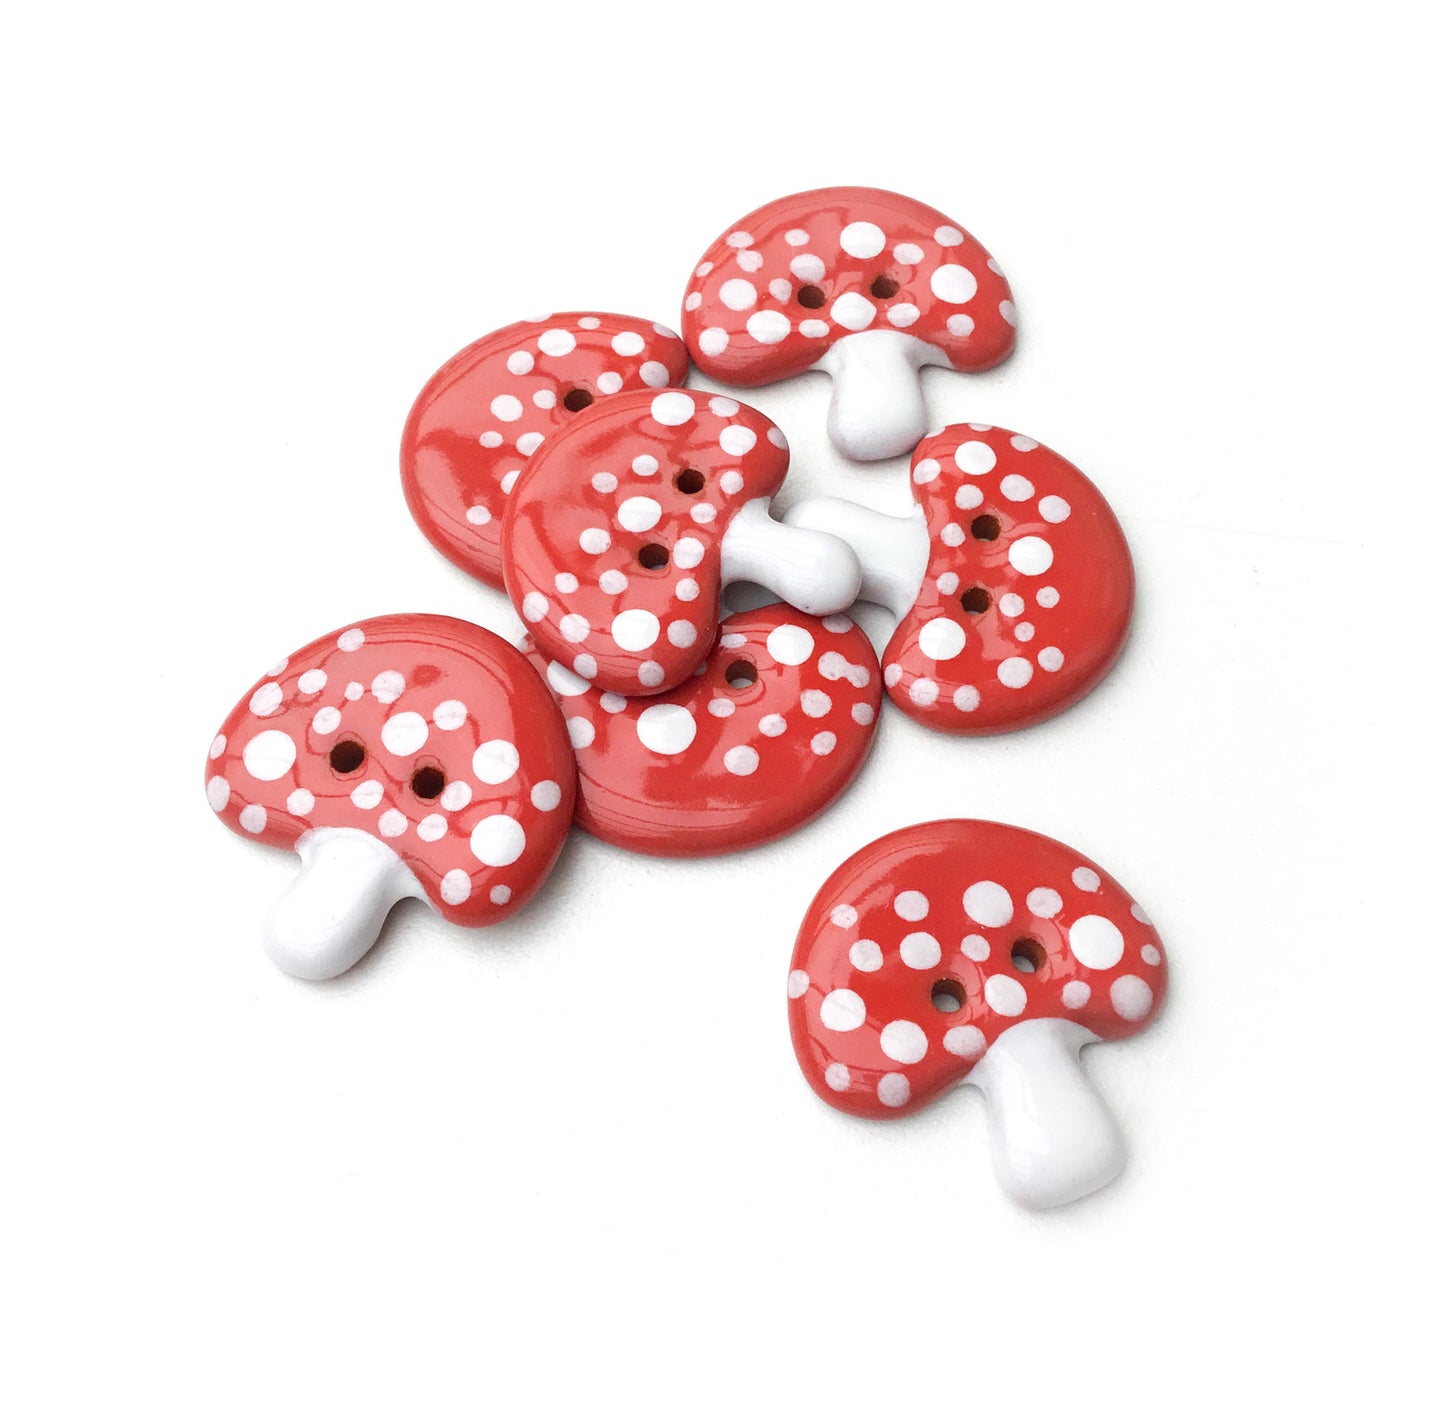 Large Amanita Mushroom Buttons - 1 1/8" x 1 1/16"